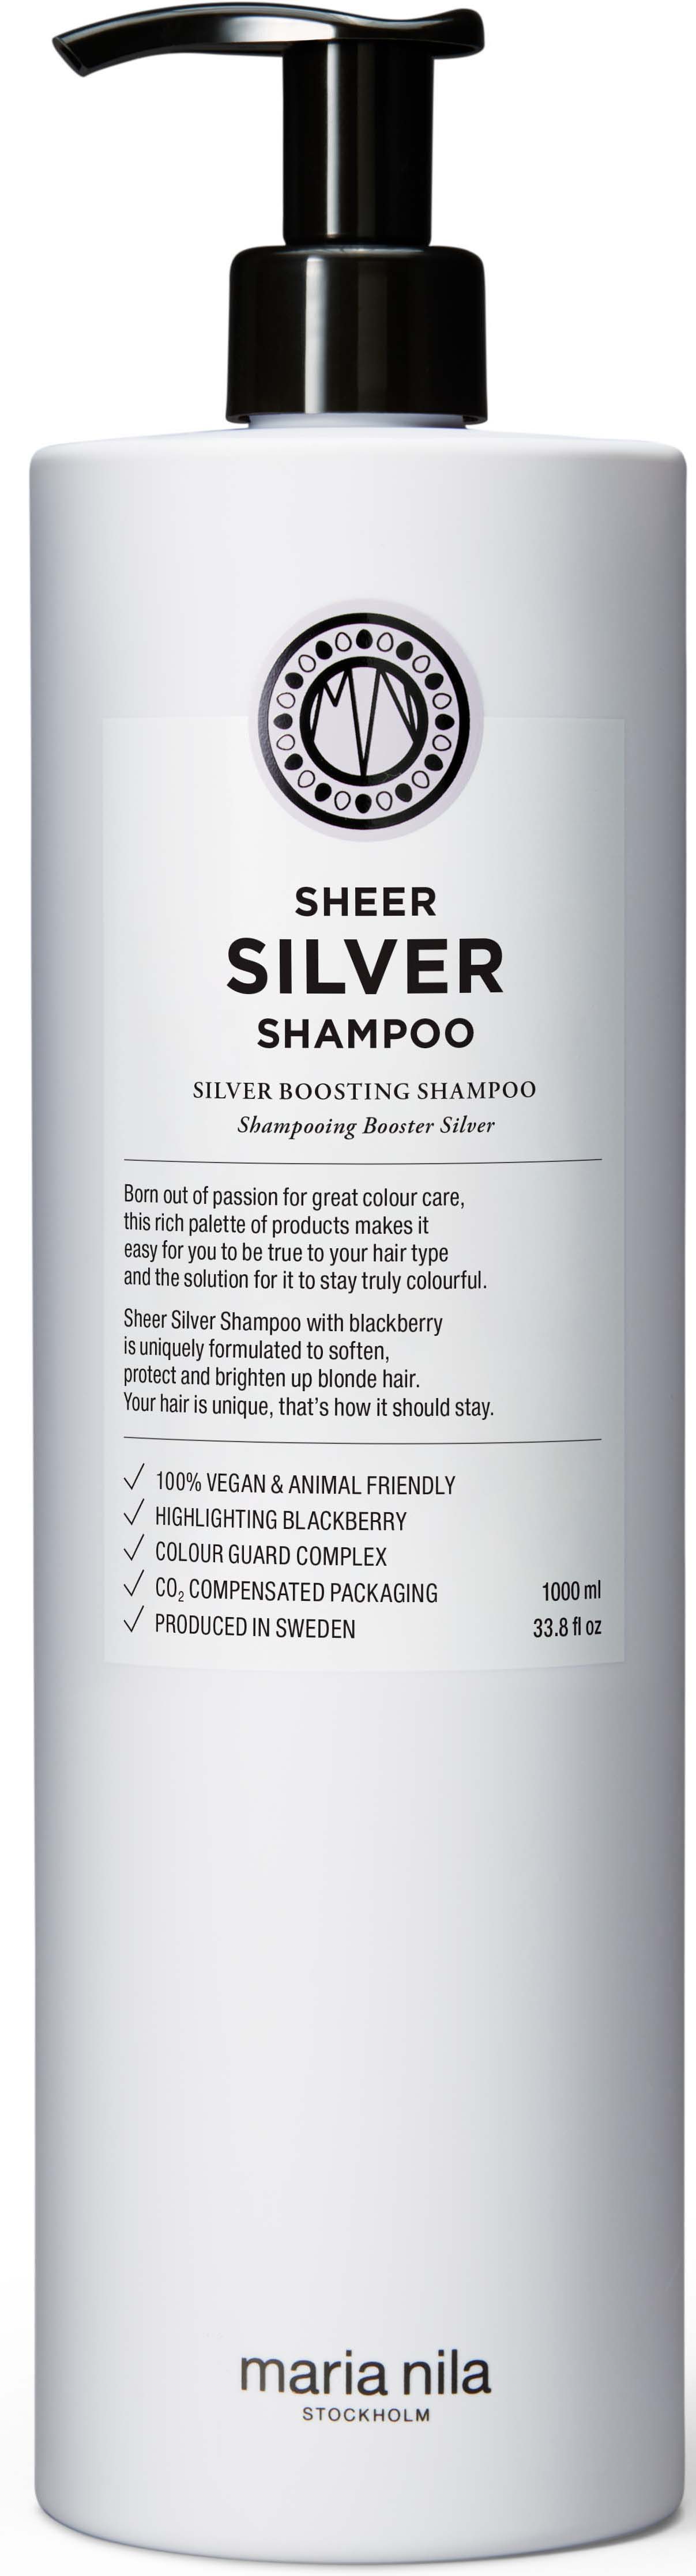 Maria Nila Palett Shampoo Sheer Silver 1000ml